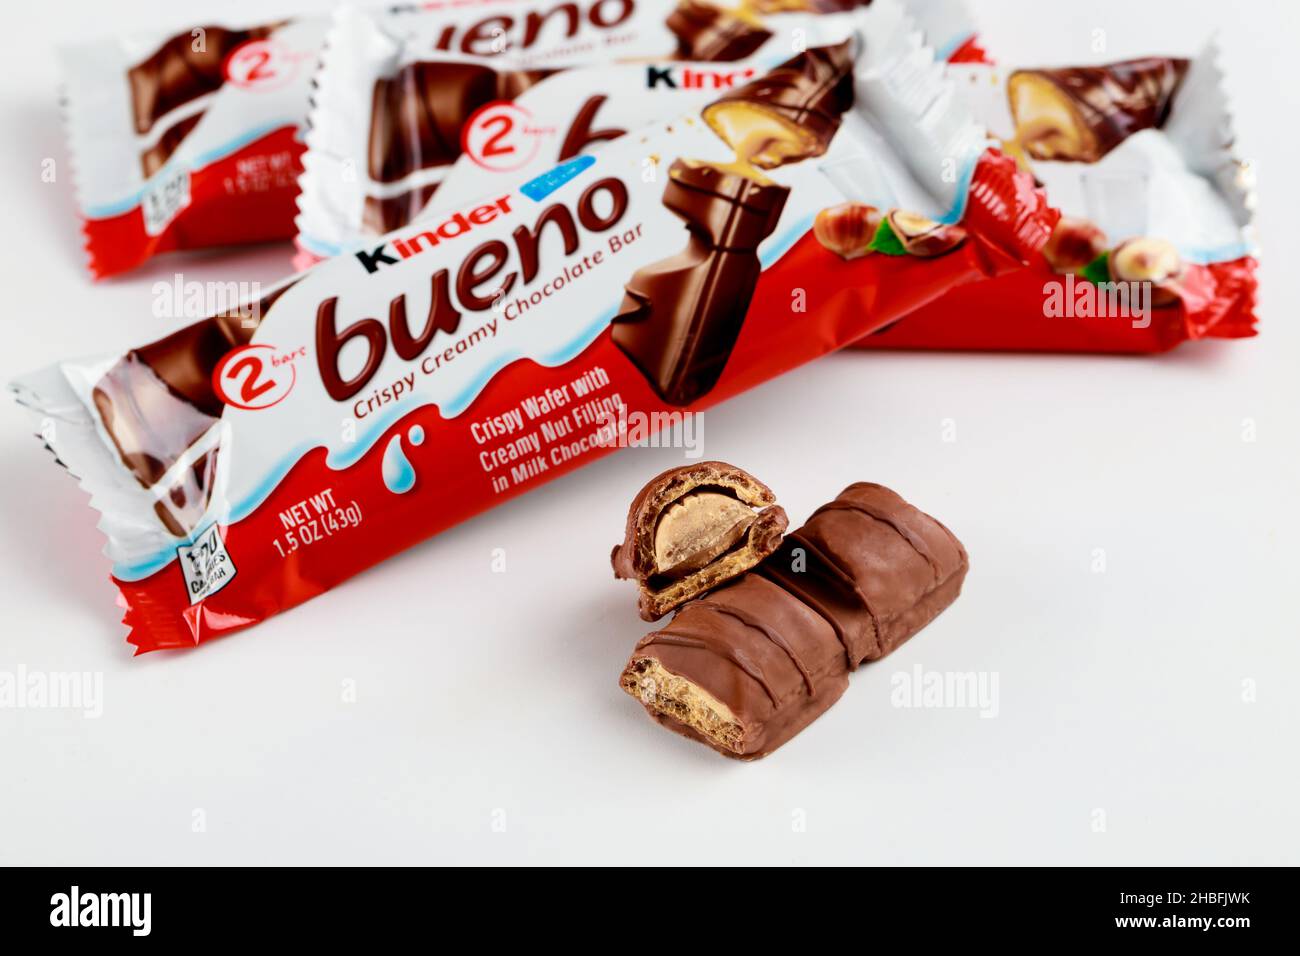 May 4, 2021. New York. Pieces of Kinder Bueno crispy milk chocolate bar. Stock Photo